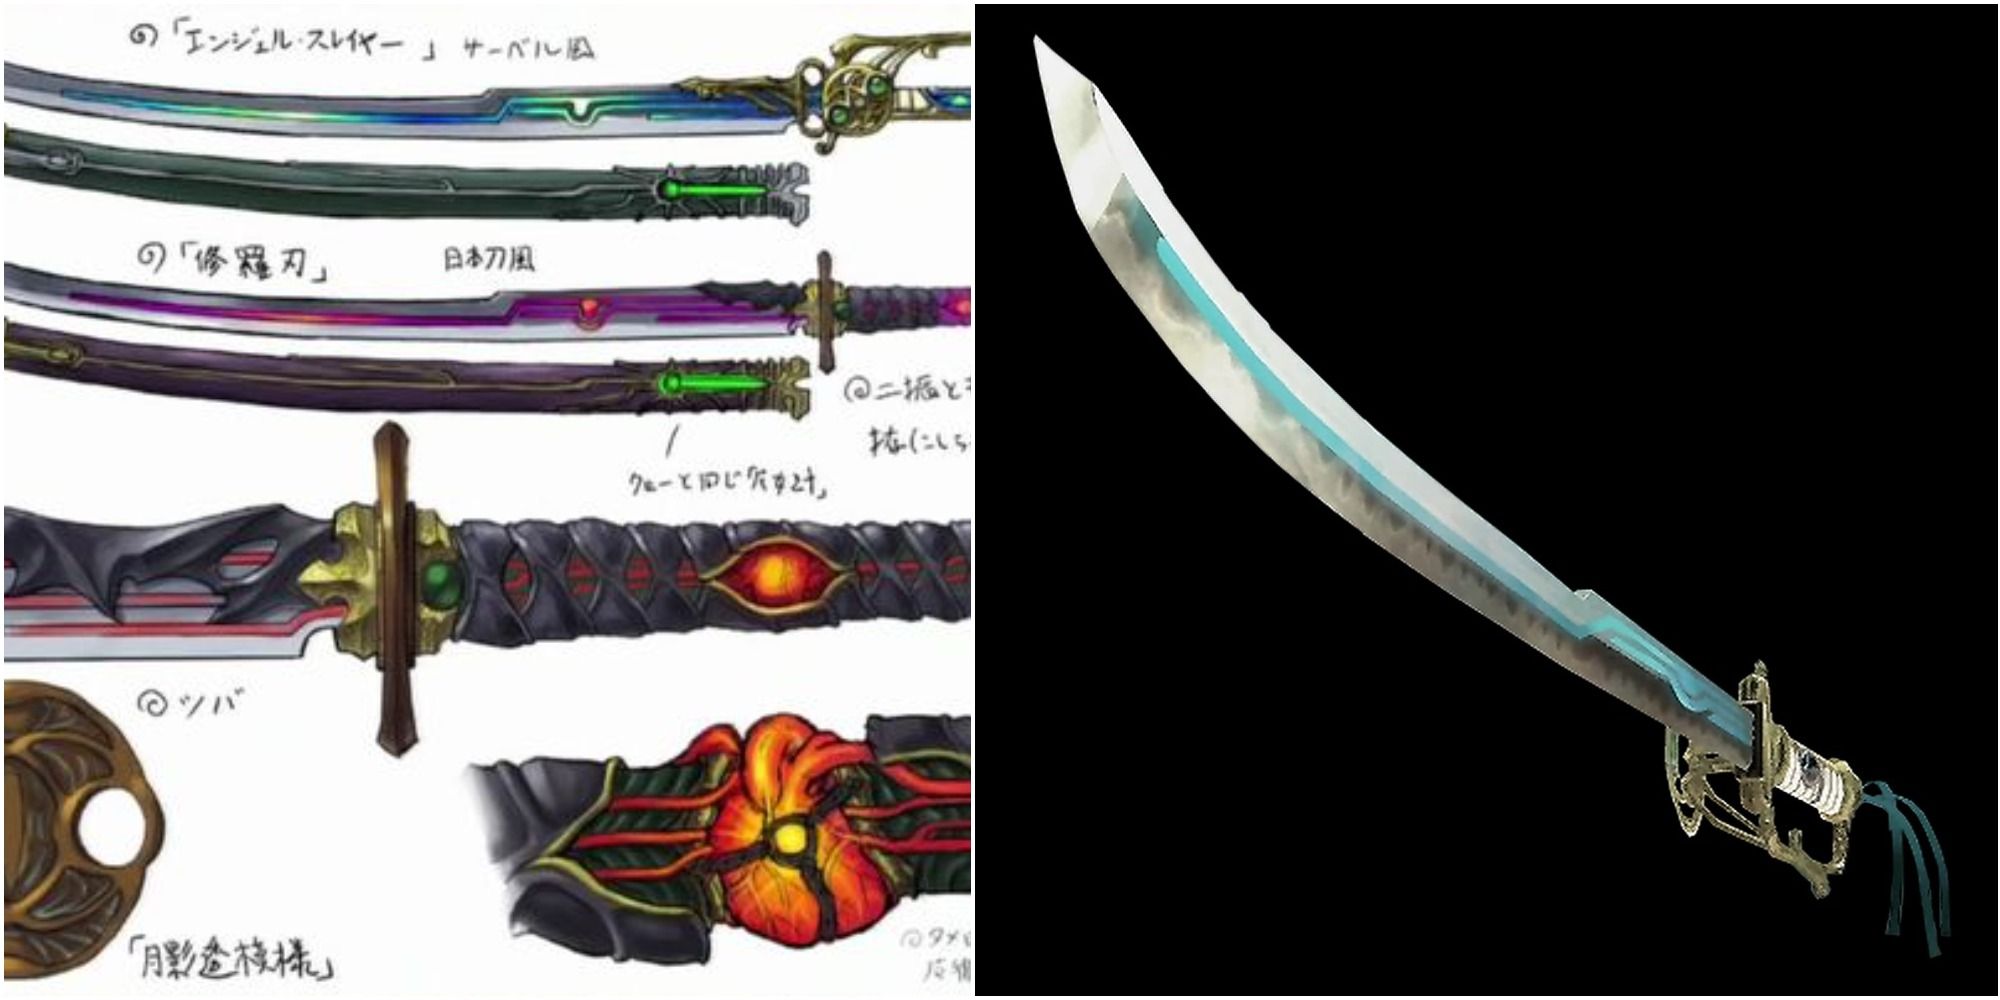 Concept art and render of Angel Slayer sword in Bayonetta